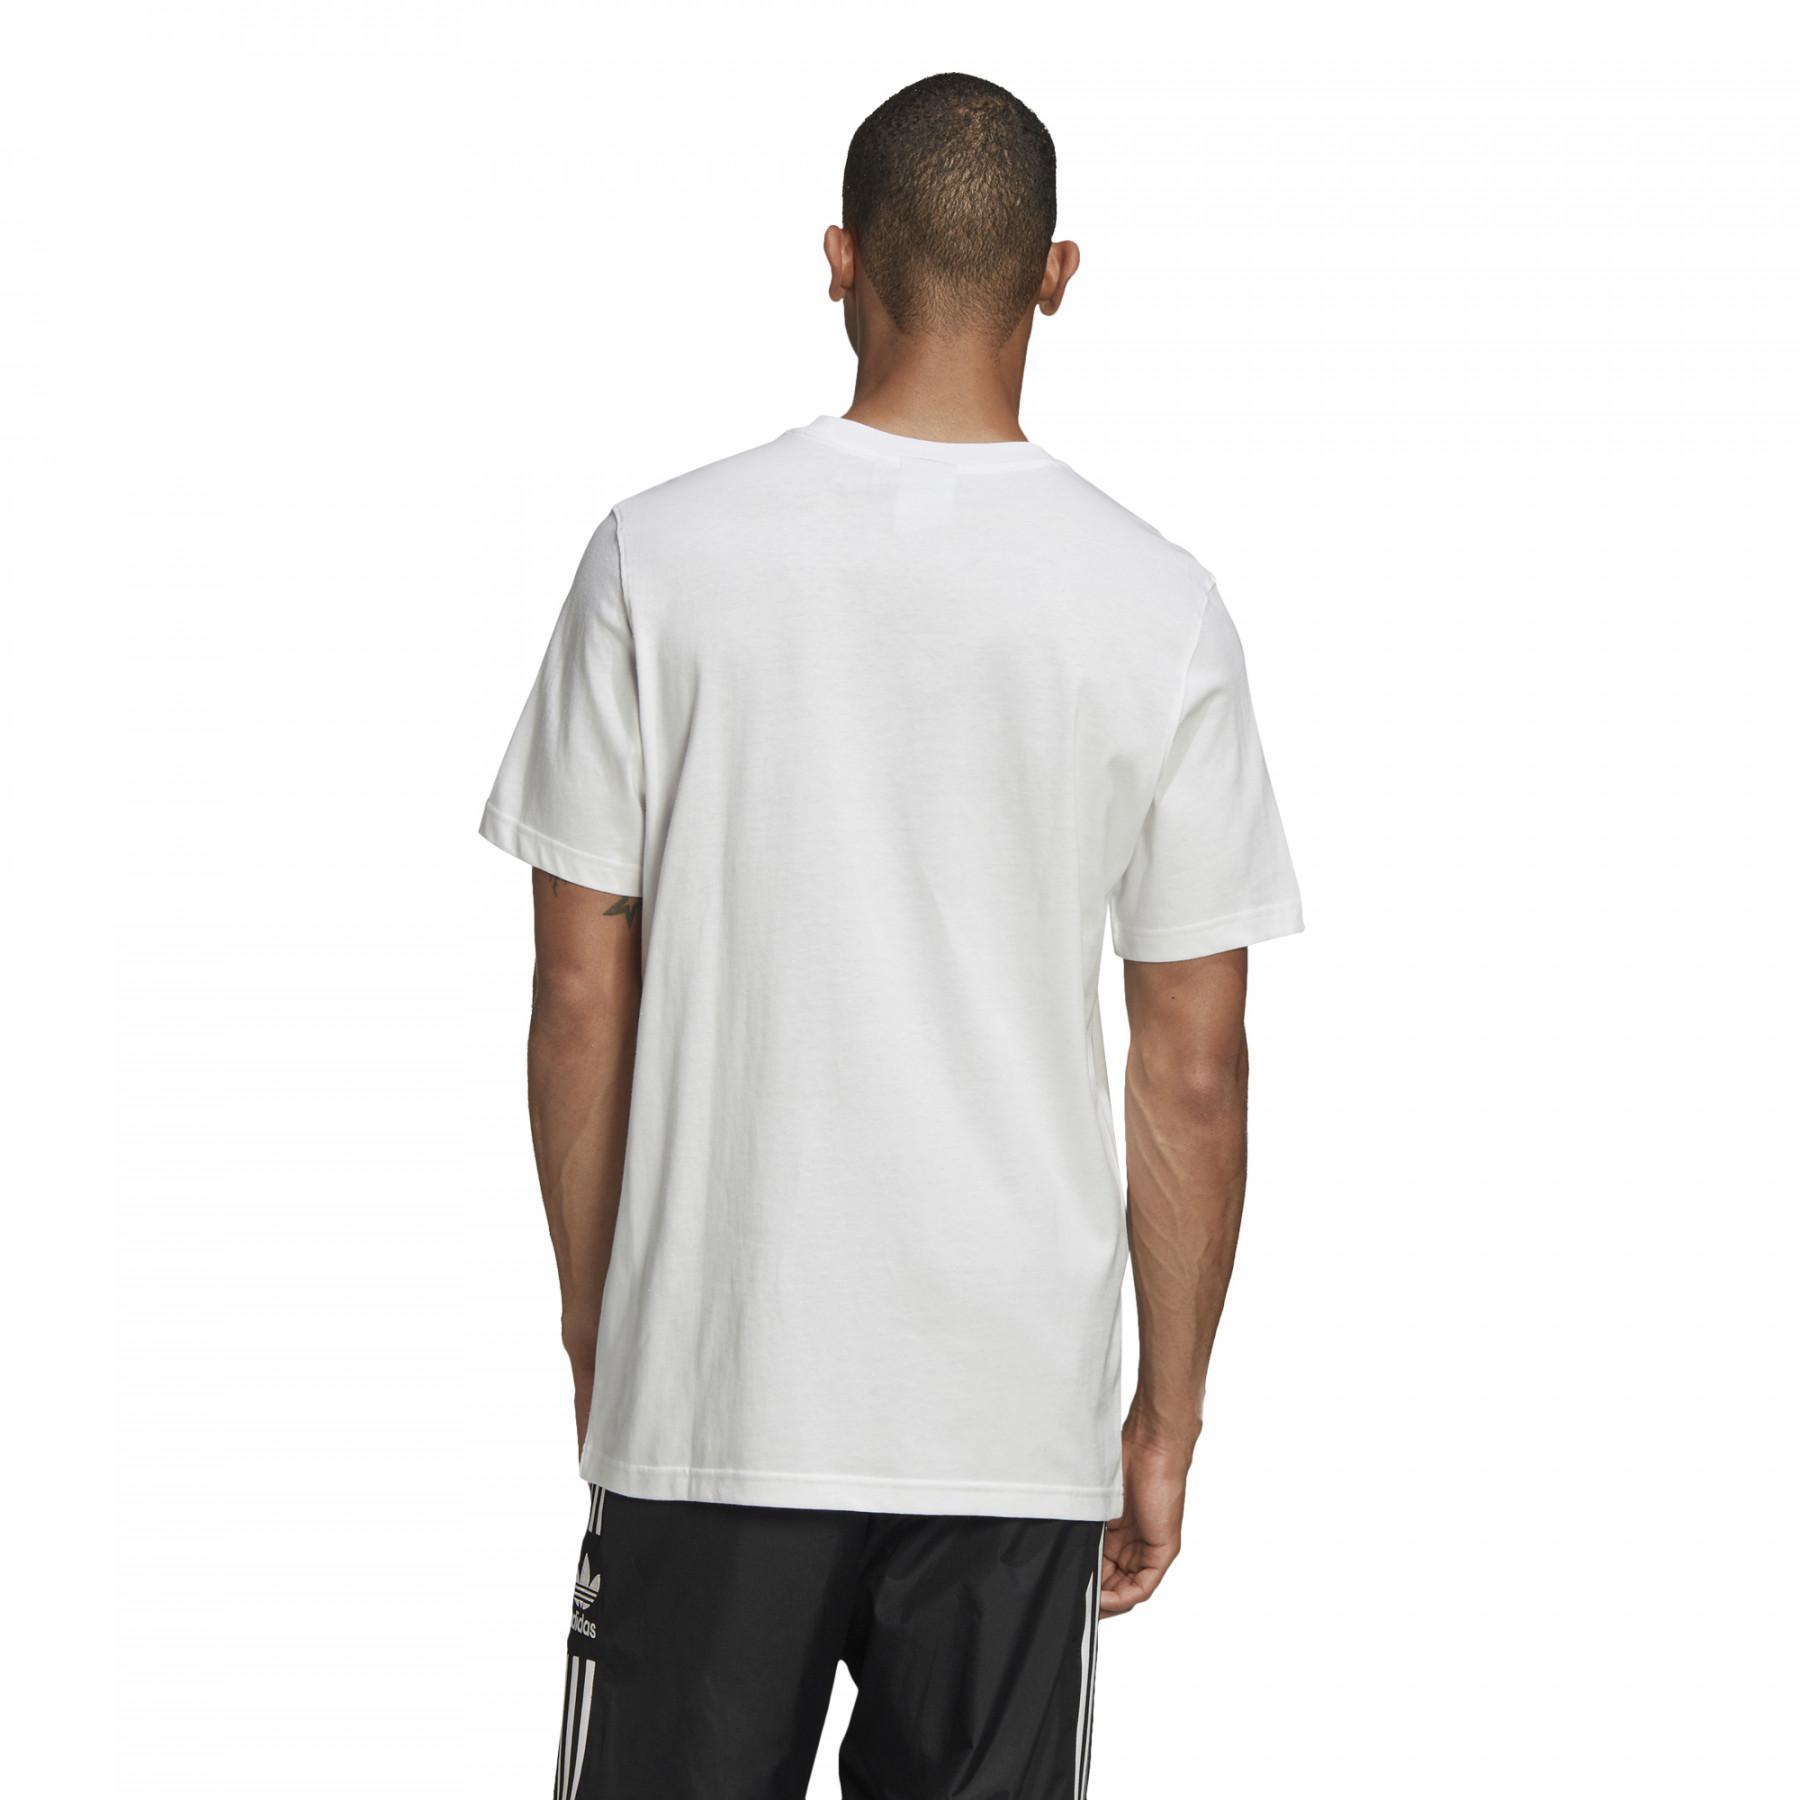 T-shirt adidas Originals Diagonal Logo